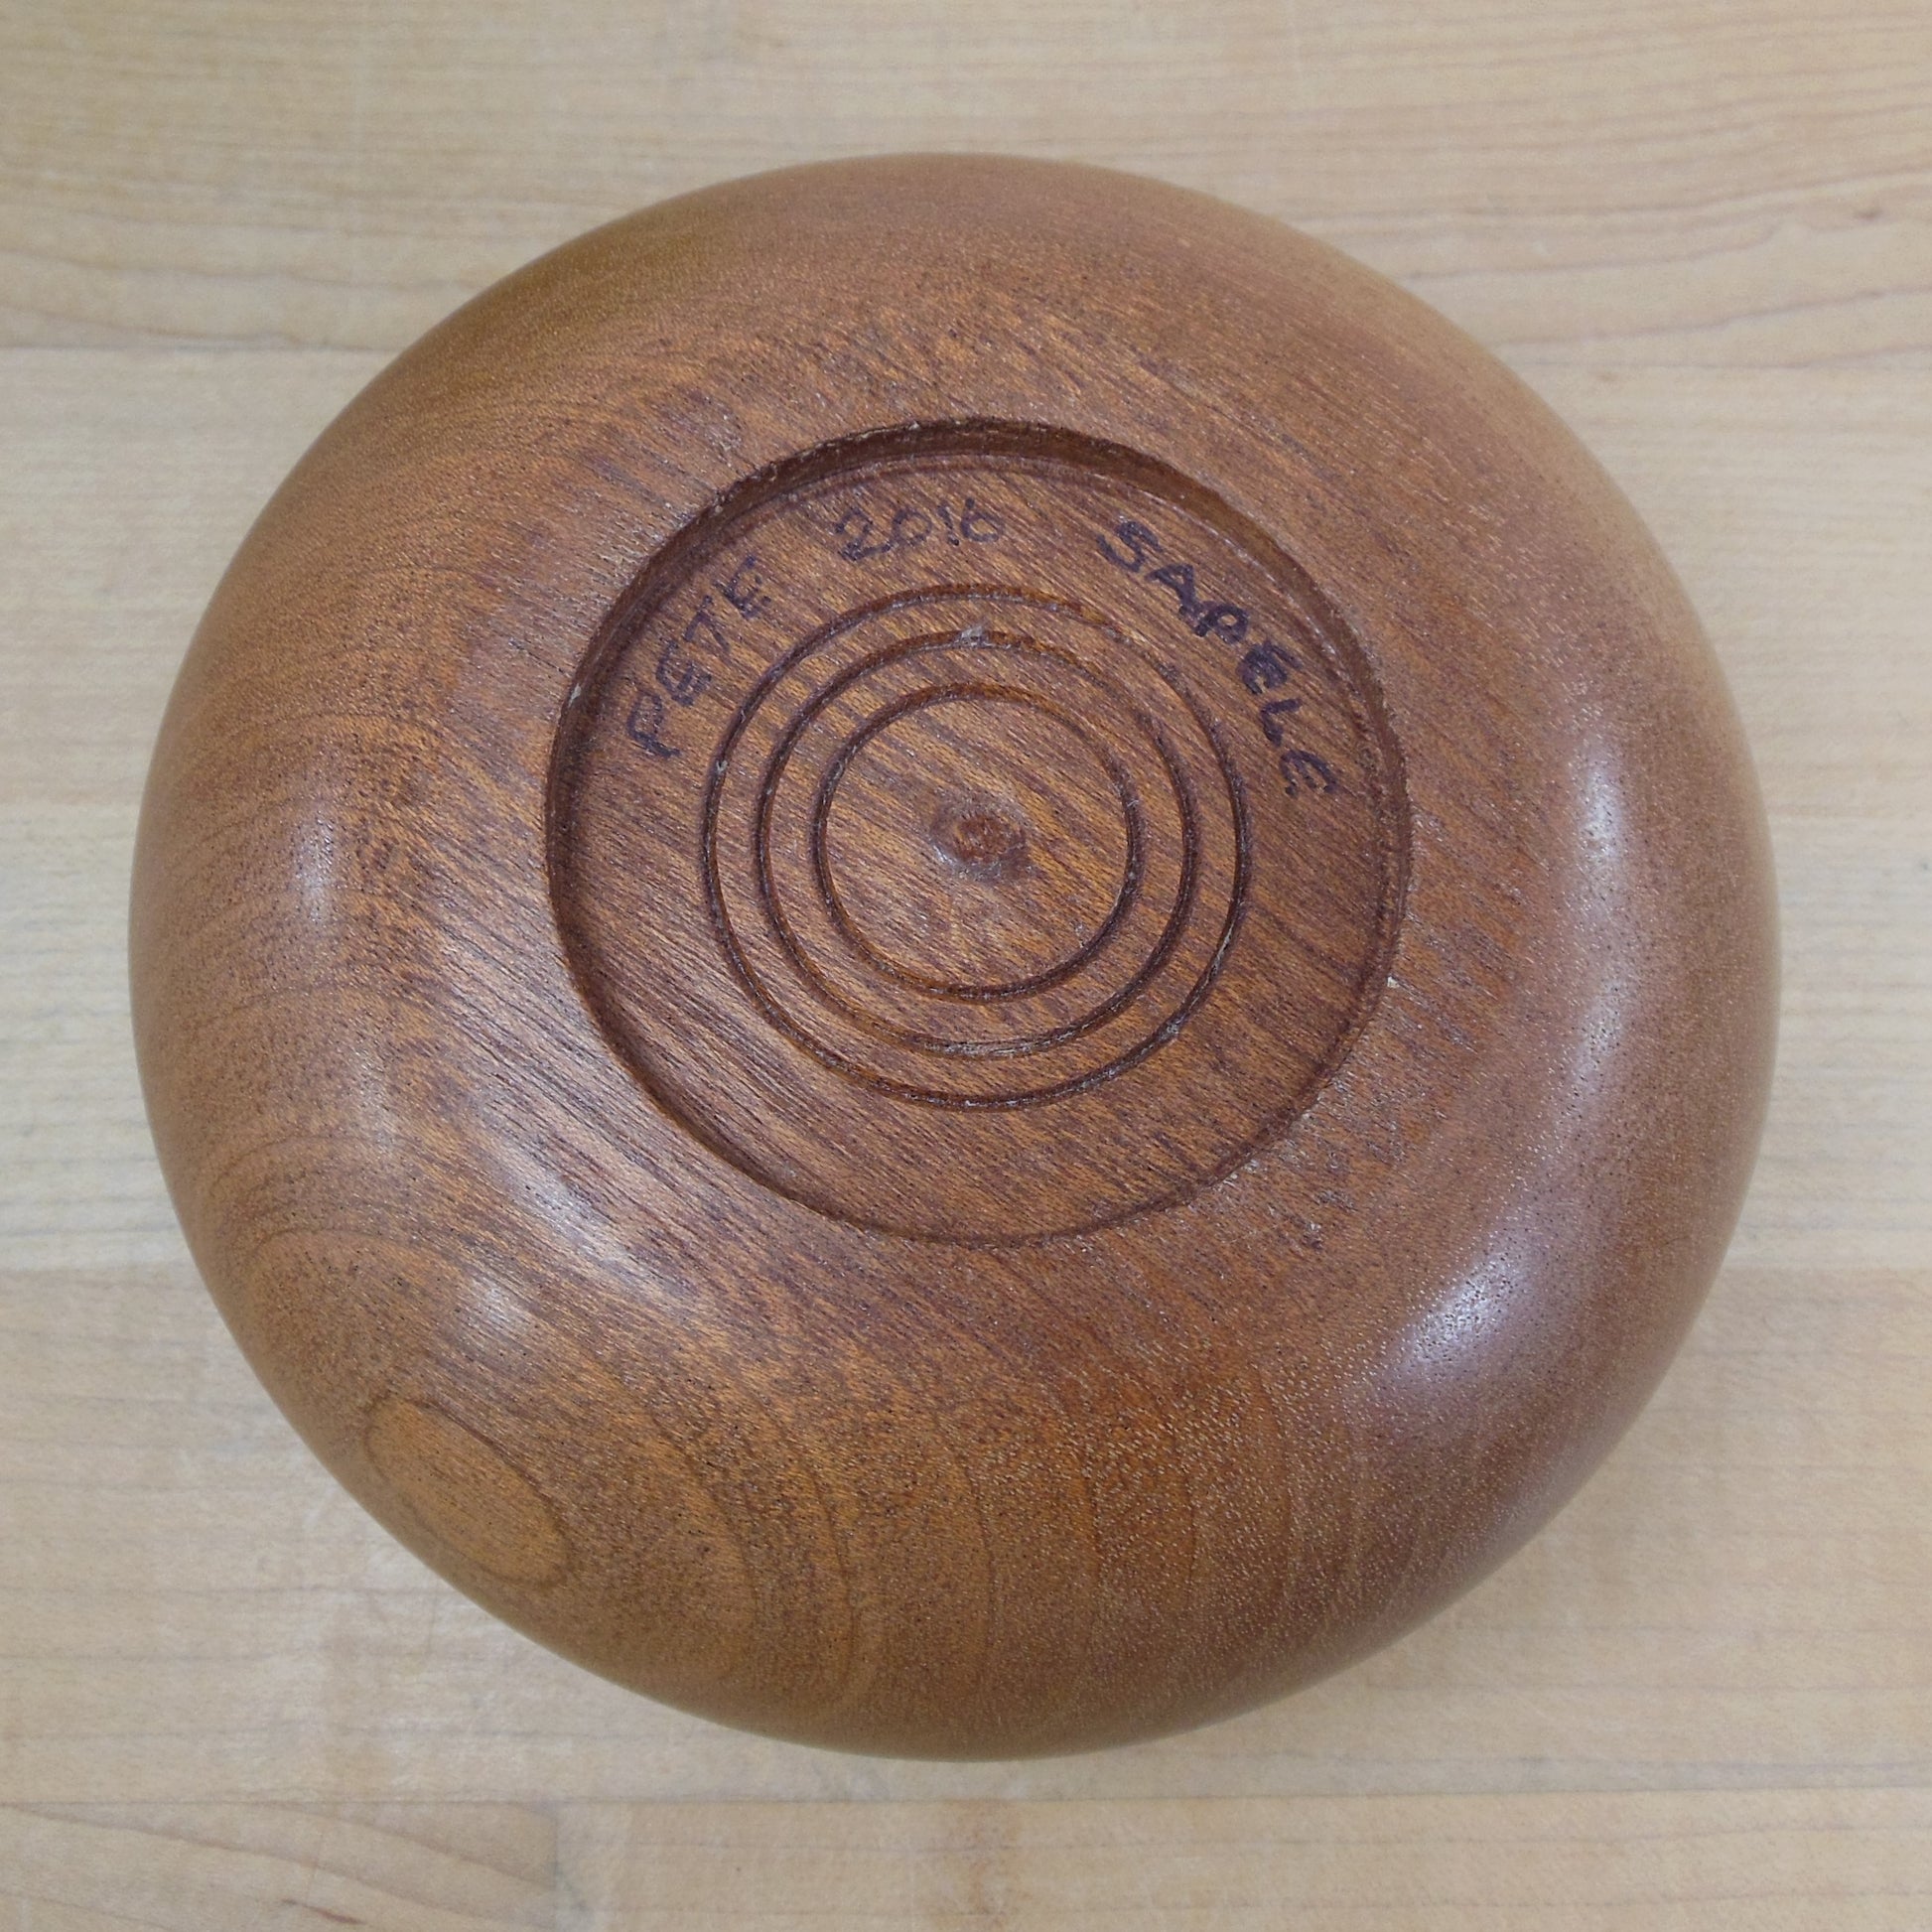 Pete Signed 2016 Sapele Turned Wood Small Bowl Object